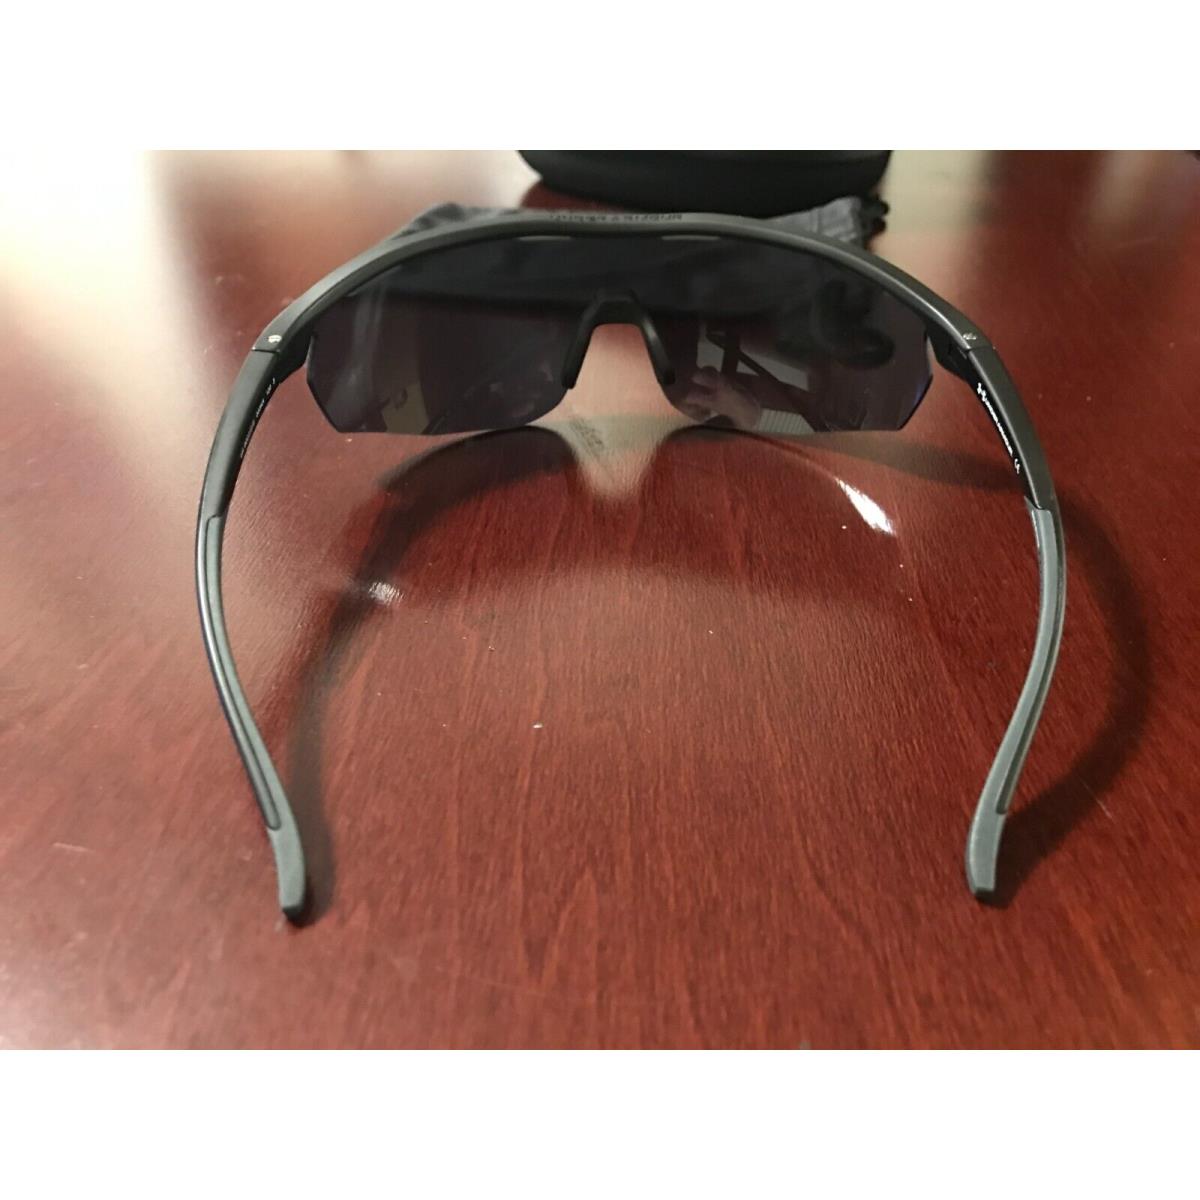 Under Armour sunglasses  - Black Frame, Black Lens 5